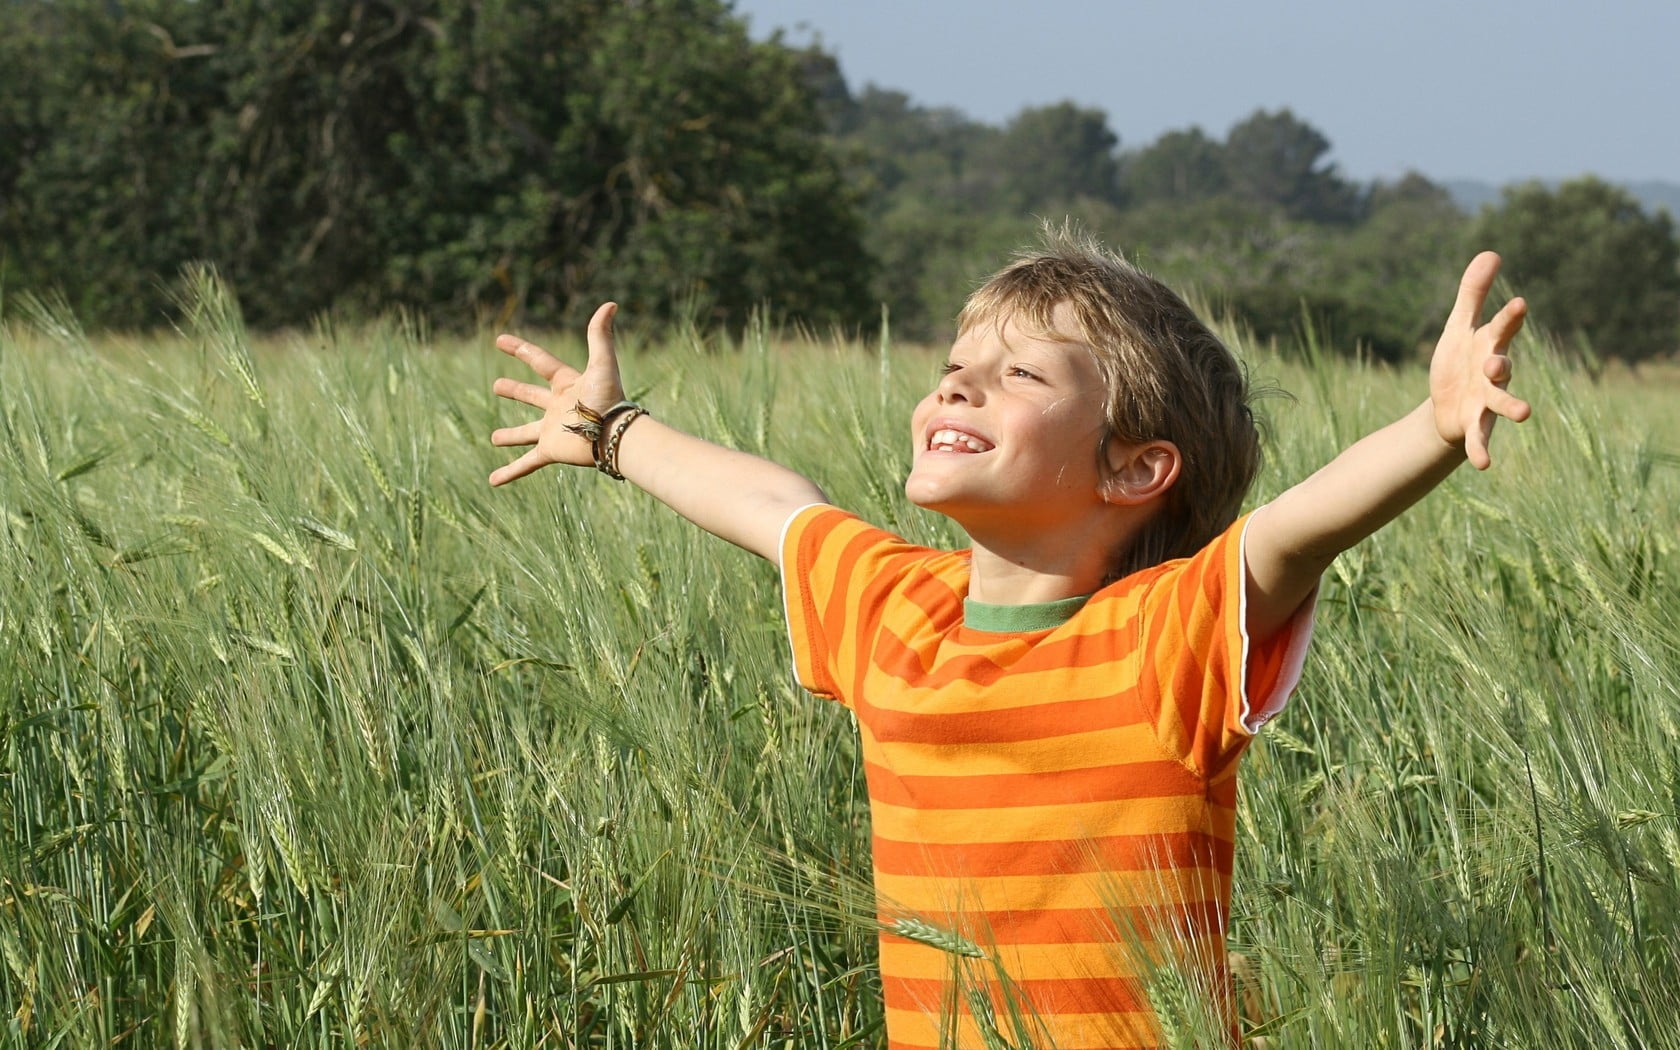 boy in orange stripes shirt on green grass field